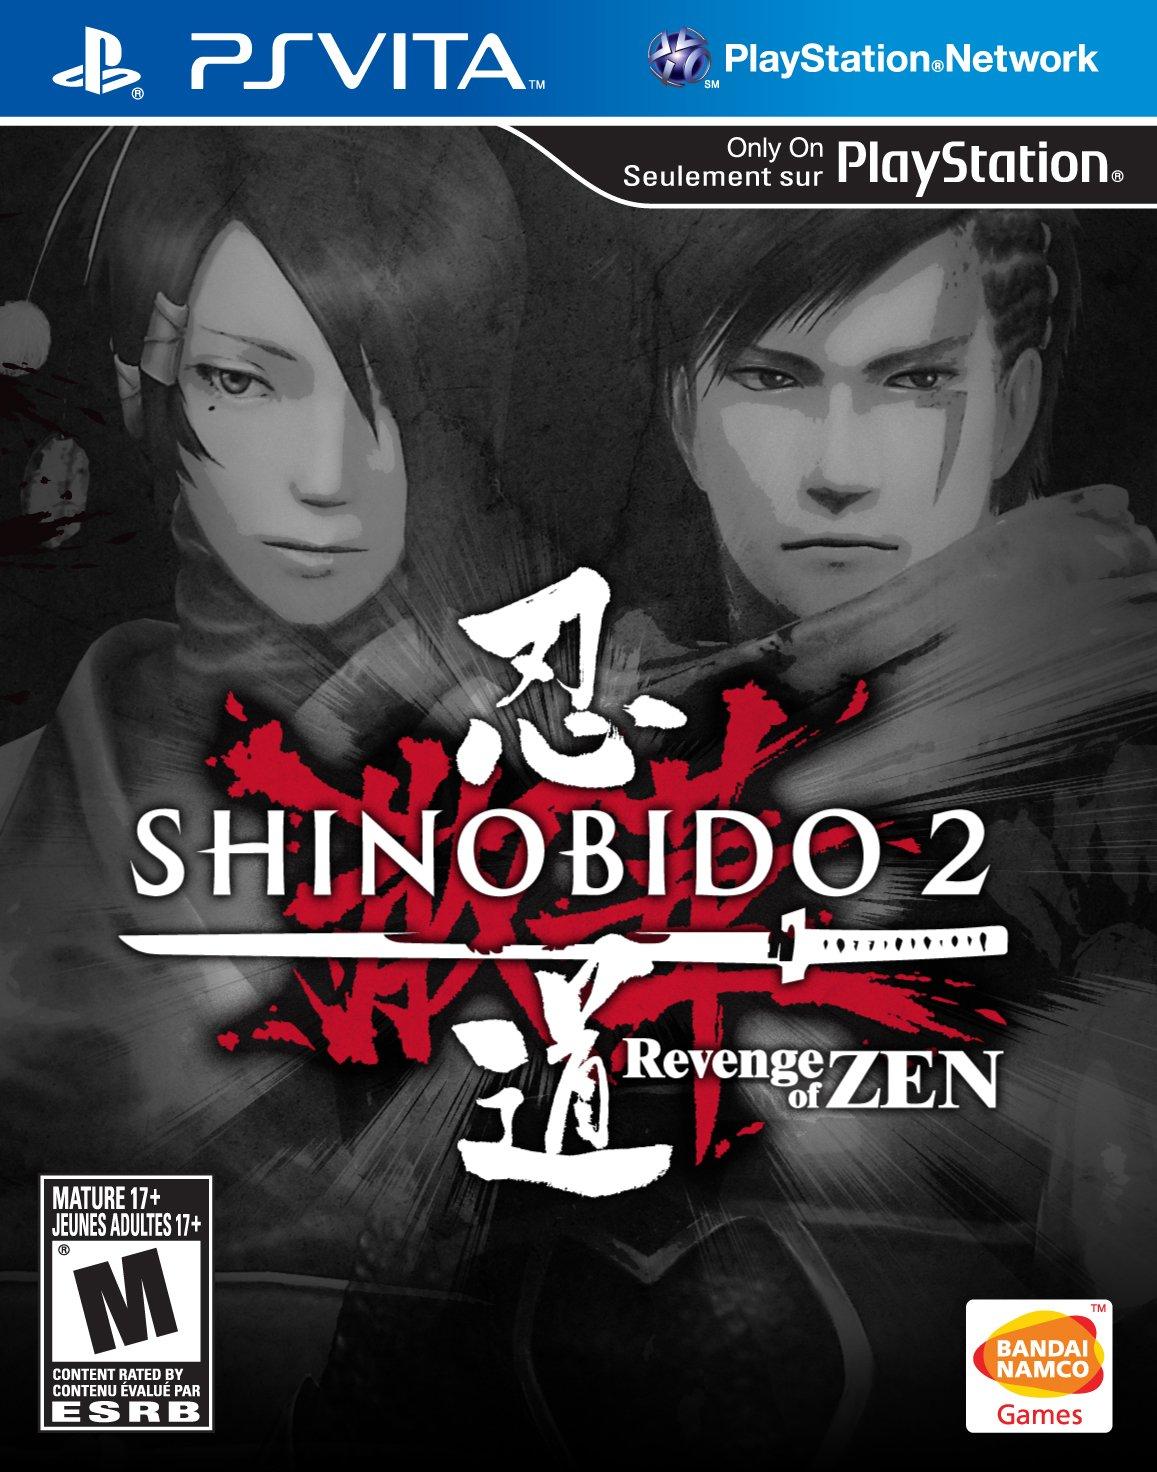 Shinobido 2: The Revenge of Zen - PS Vita